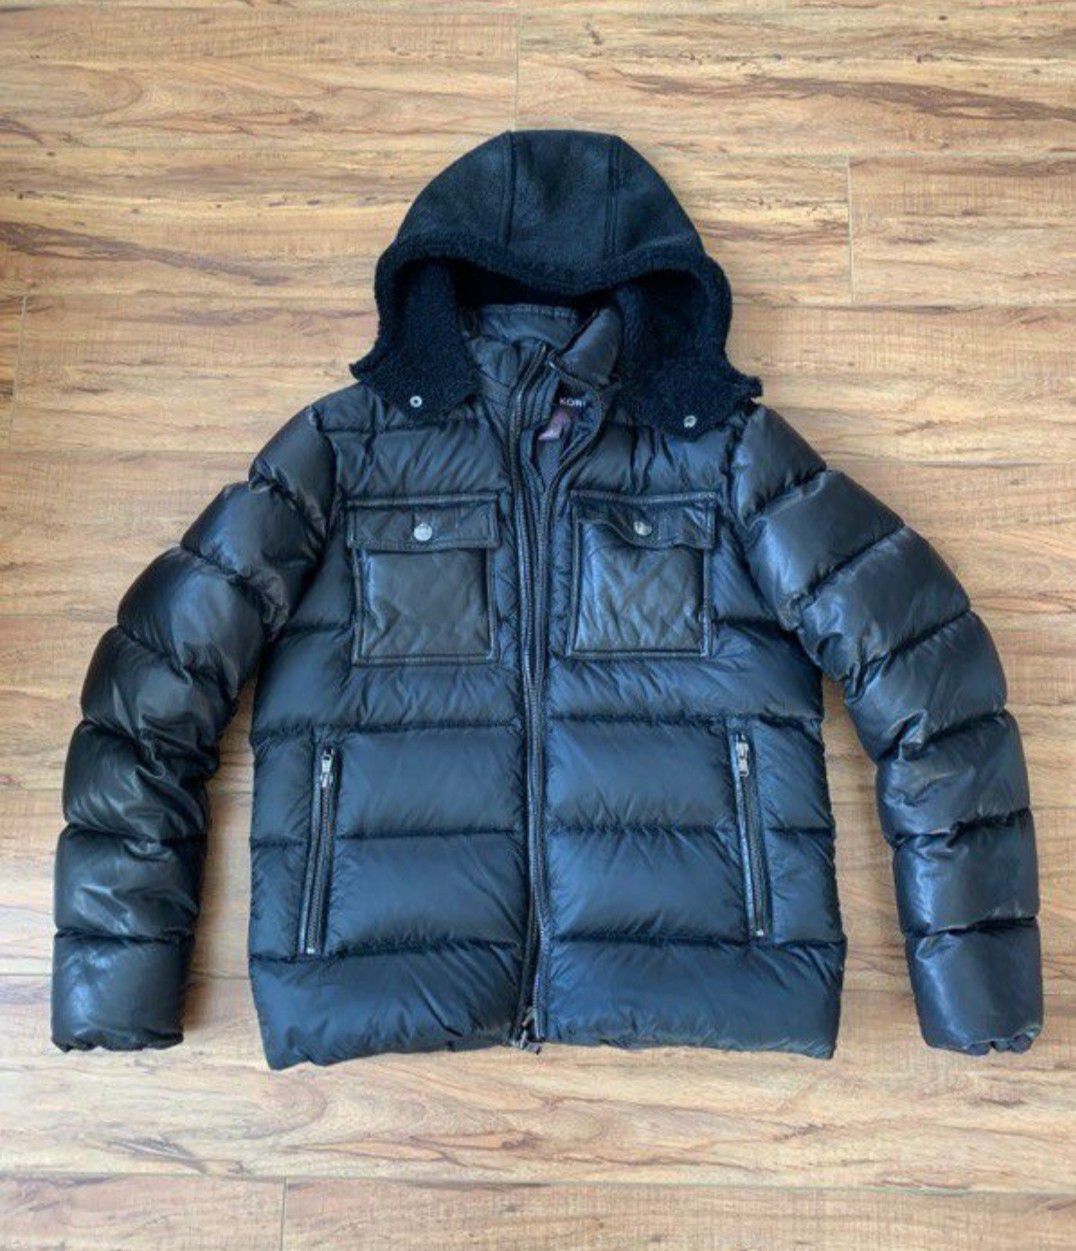 NEW! Michael Kors women's puffer jacket coat w/ sheep skin detachable hoodie - size medium